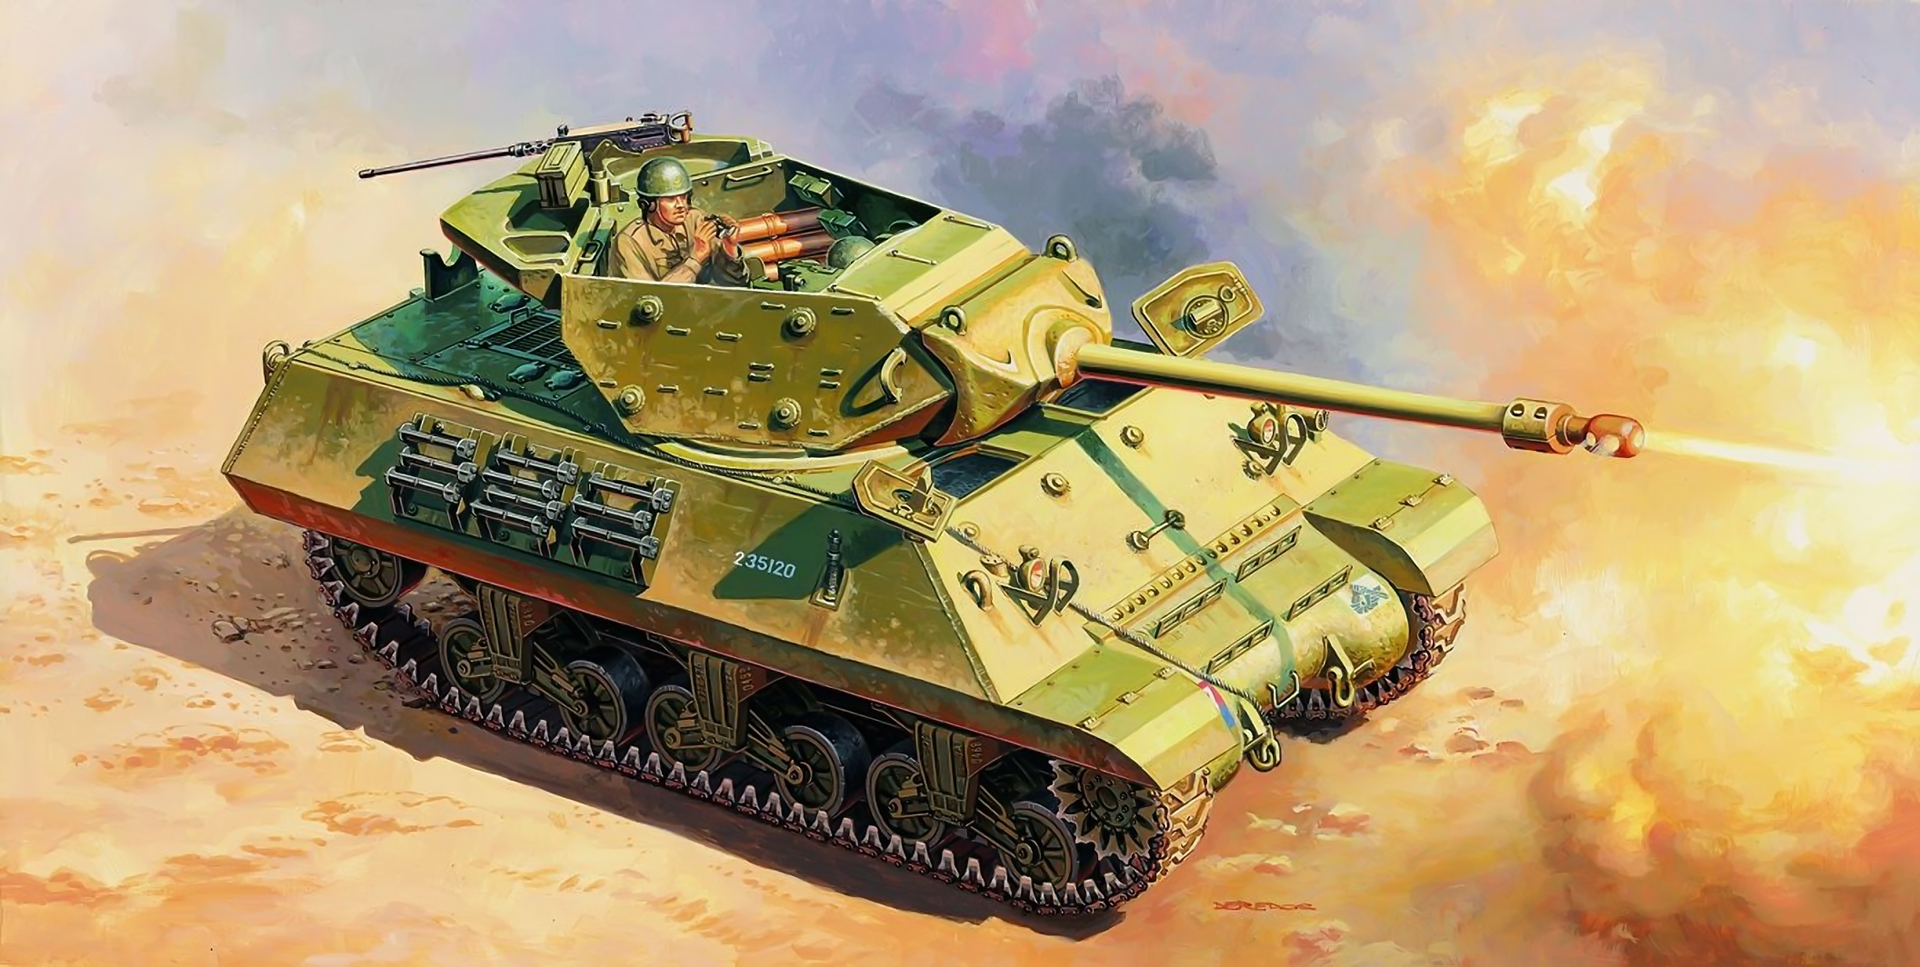 General 1920x967 tank army military military vehicle artwork soldier American tanks hat men uniform smoke Tank hunter